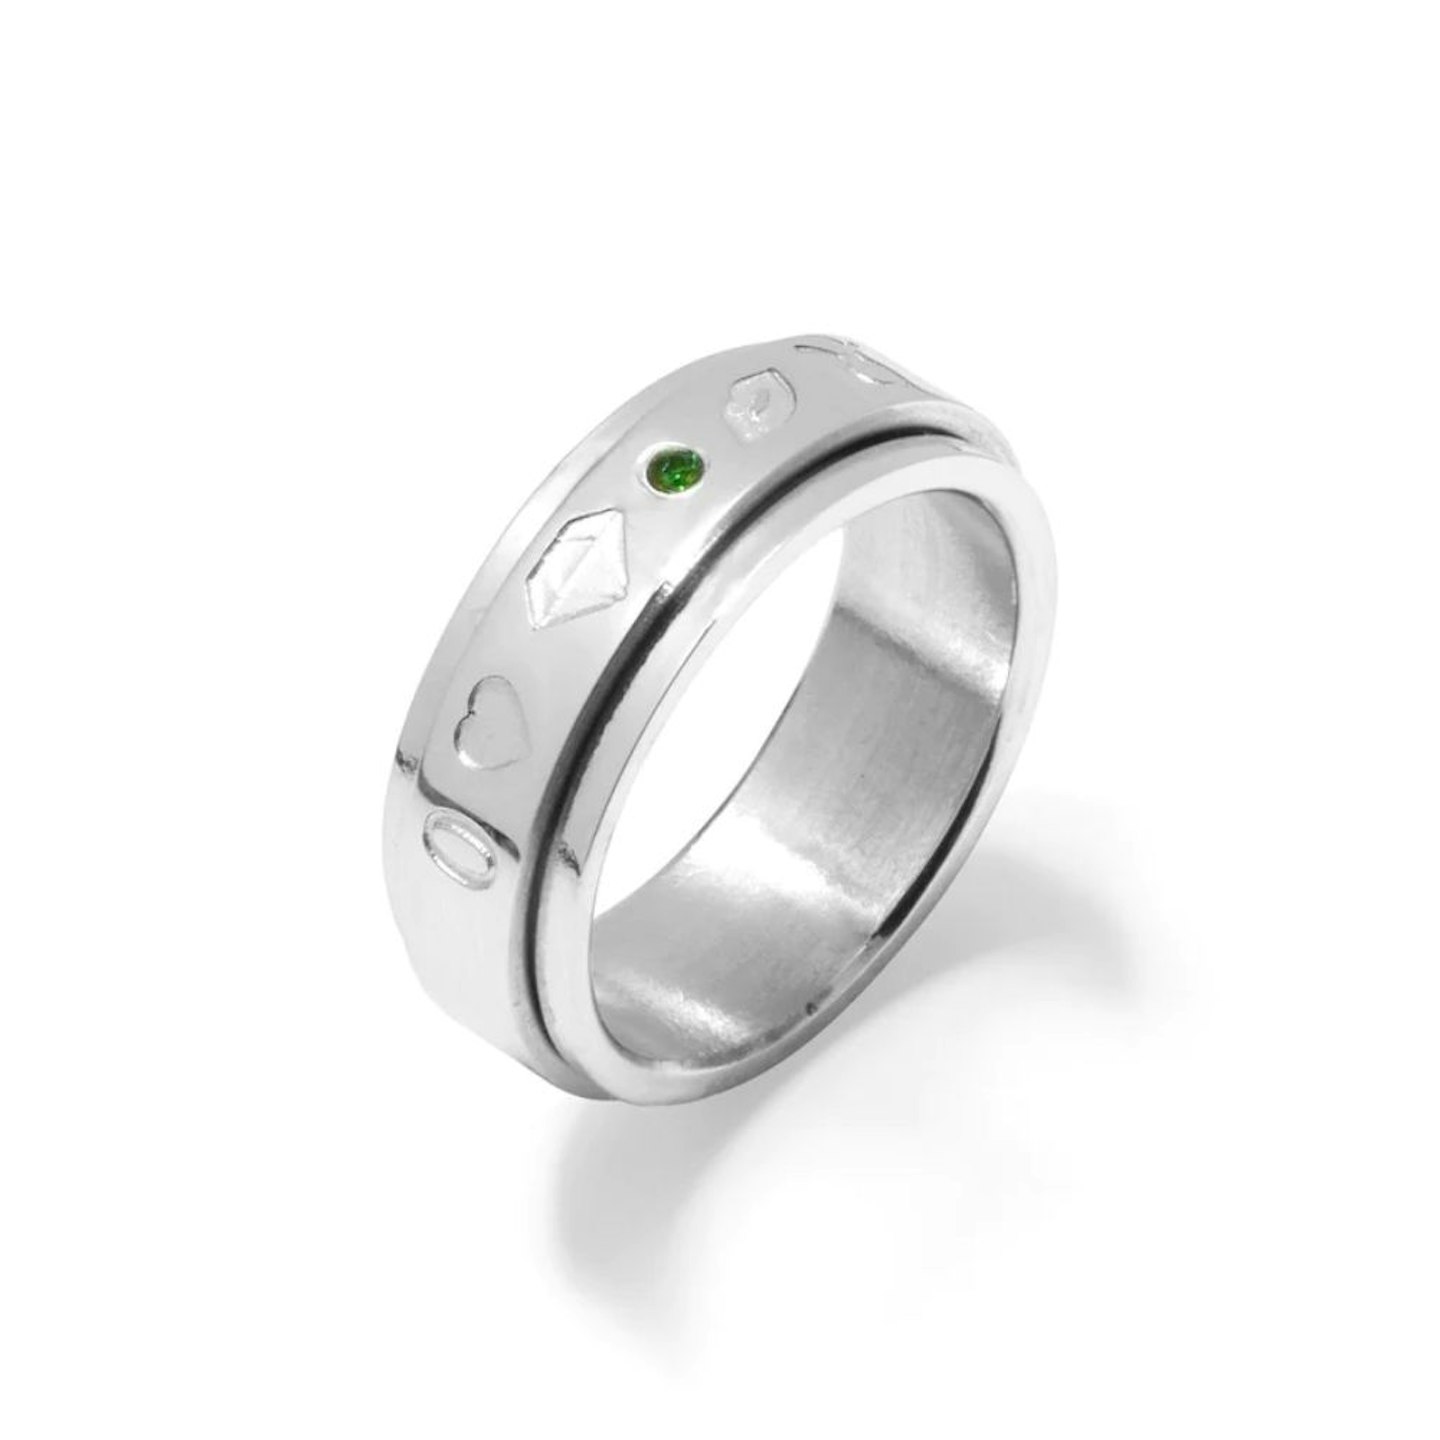 Abbott Lyon Custom Stamped Fidget Ring